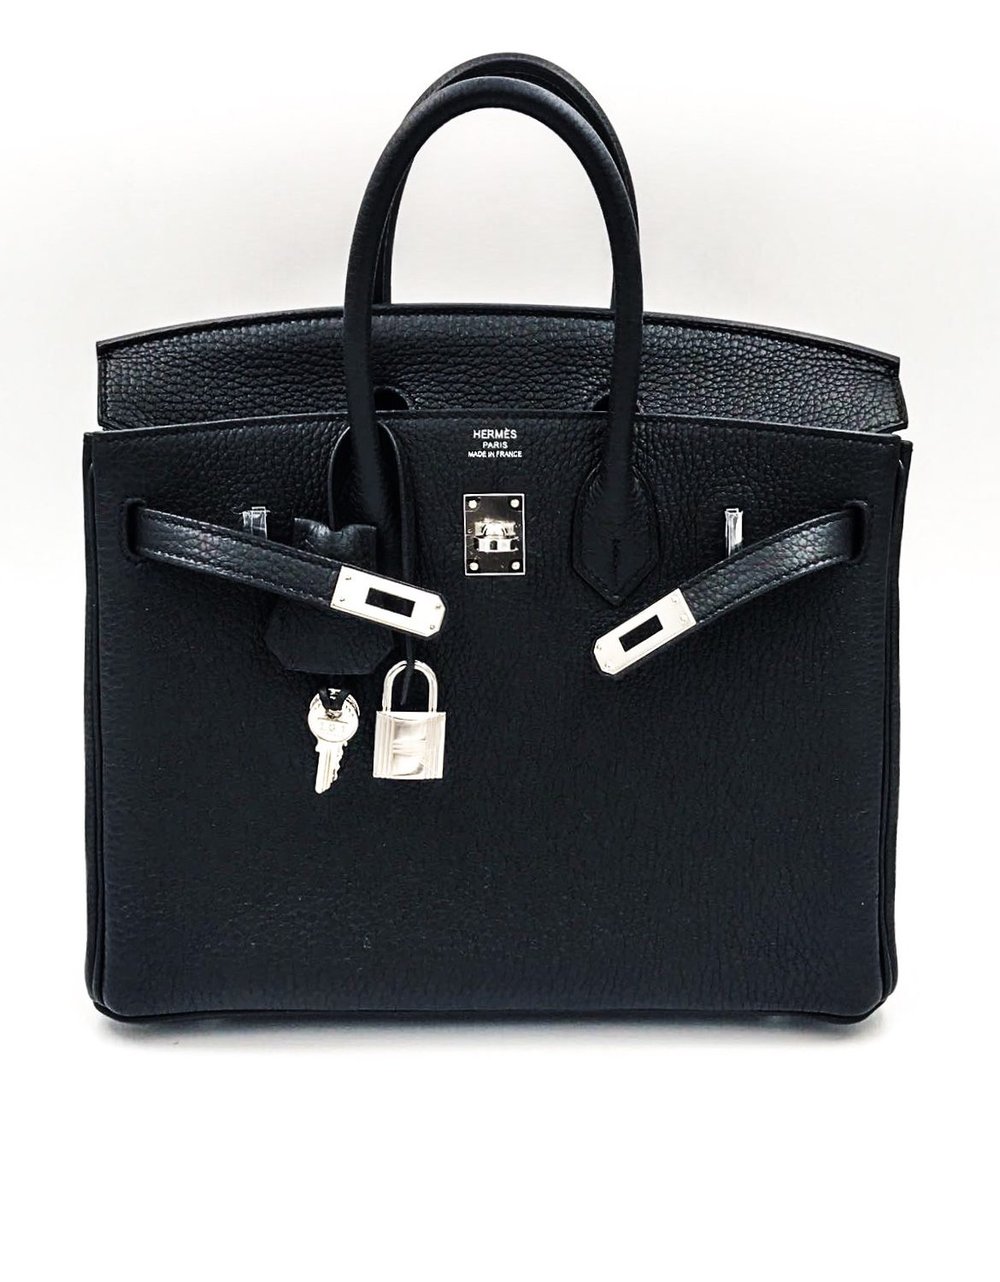 Hermes Birkin 25 Bag in Black with Palladium Hardware — UFO No More